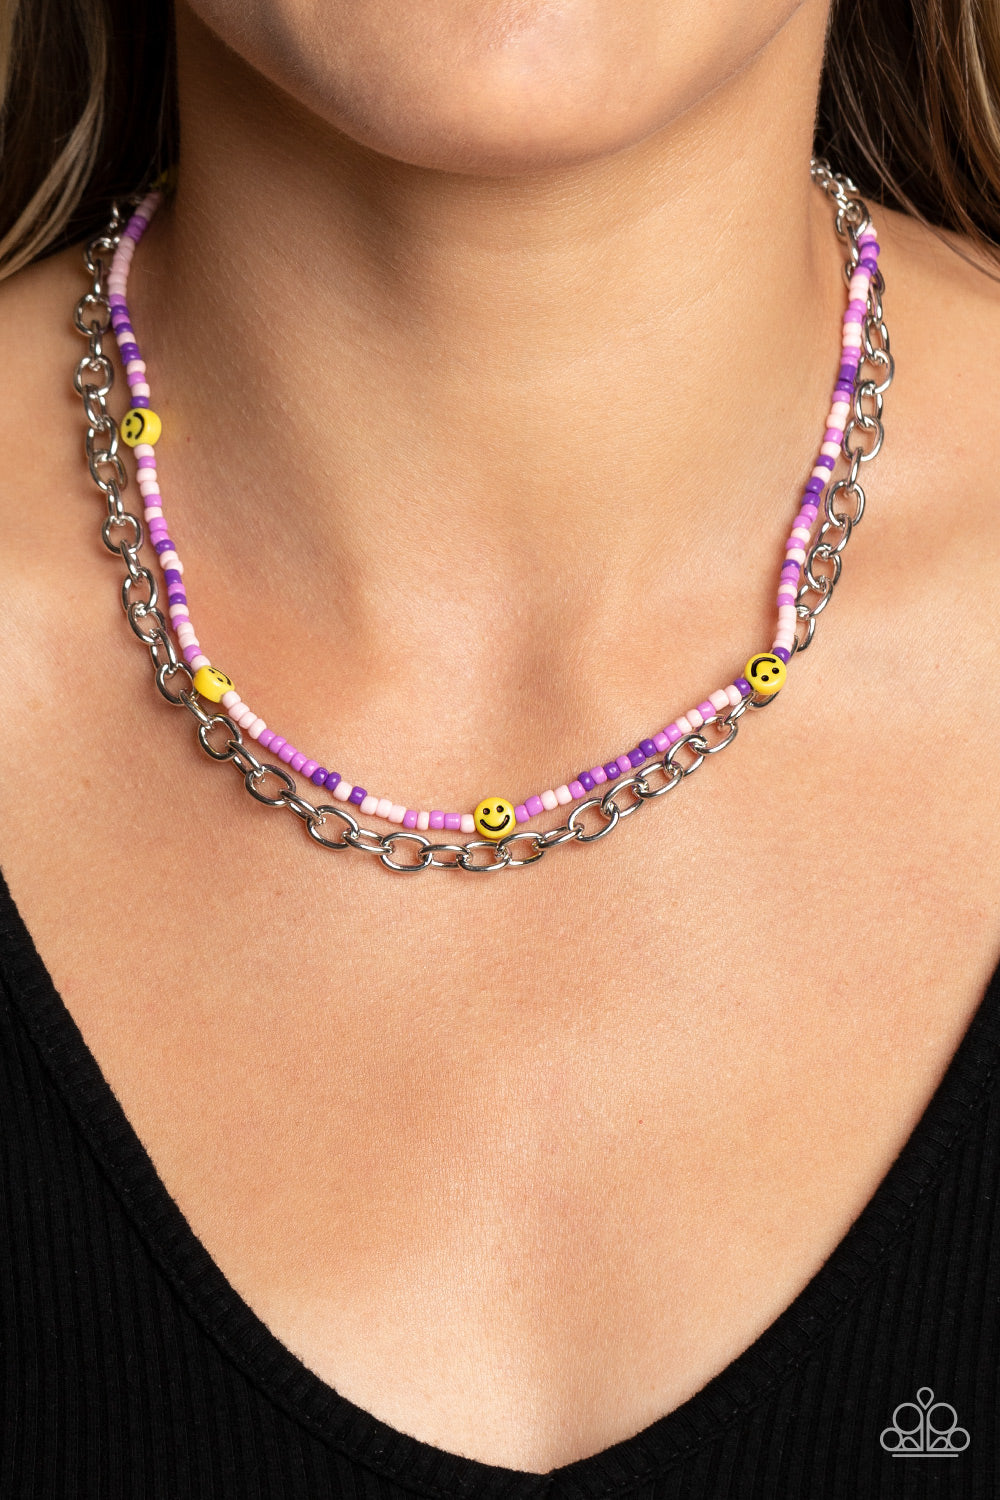 Paparazzi “Happy Looks Good on You” Purple Necklace Earring Set - Cindysblingboutique